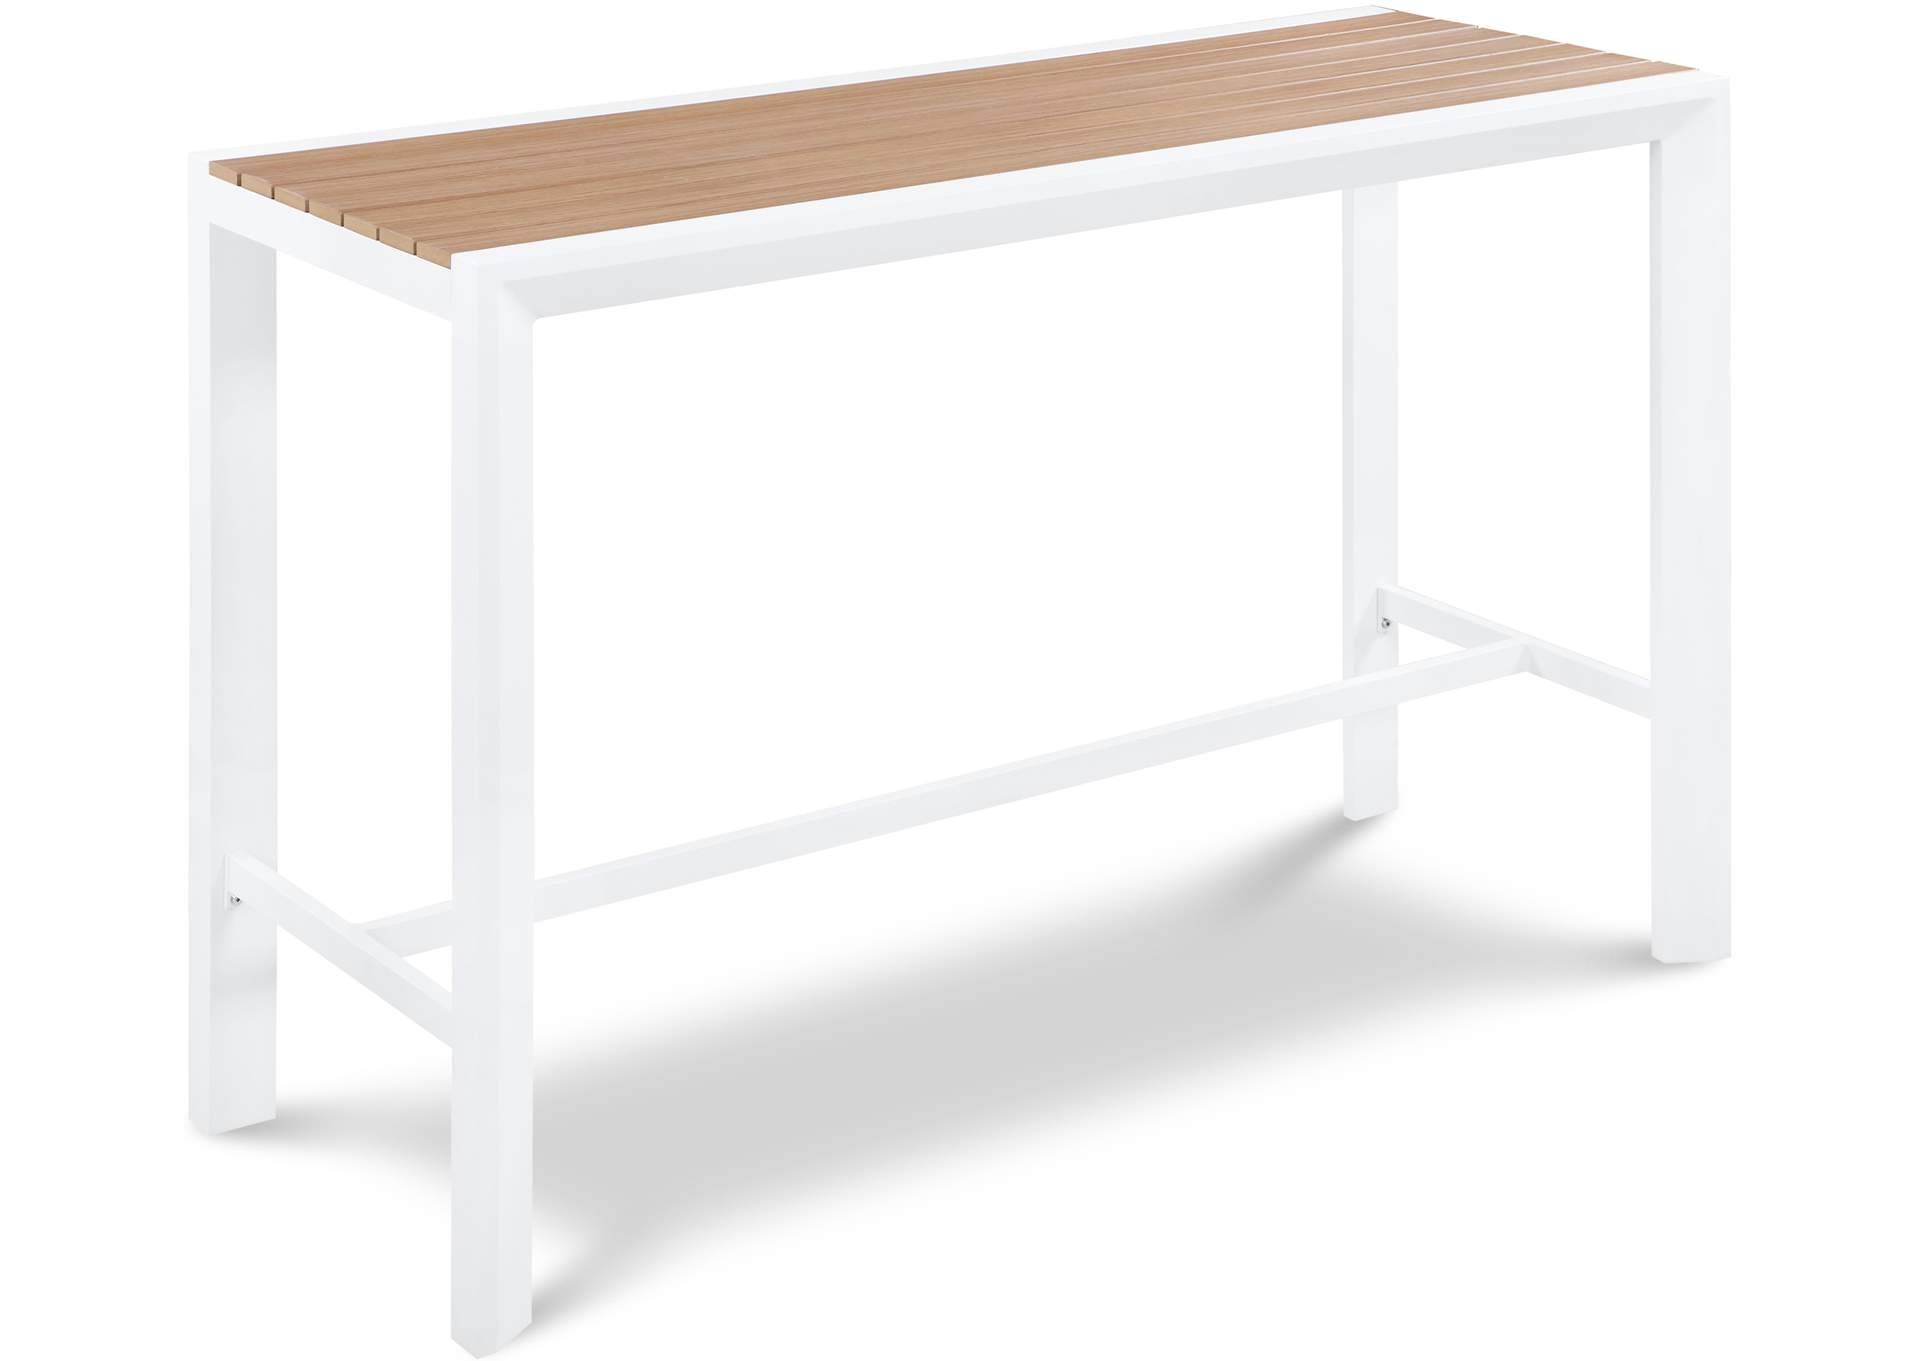 Nizuc Brown Wood Look Accent Paneling Outdoor Patio Aluminum Rectangle Bar Table,Meridian Furniture